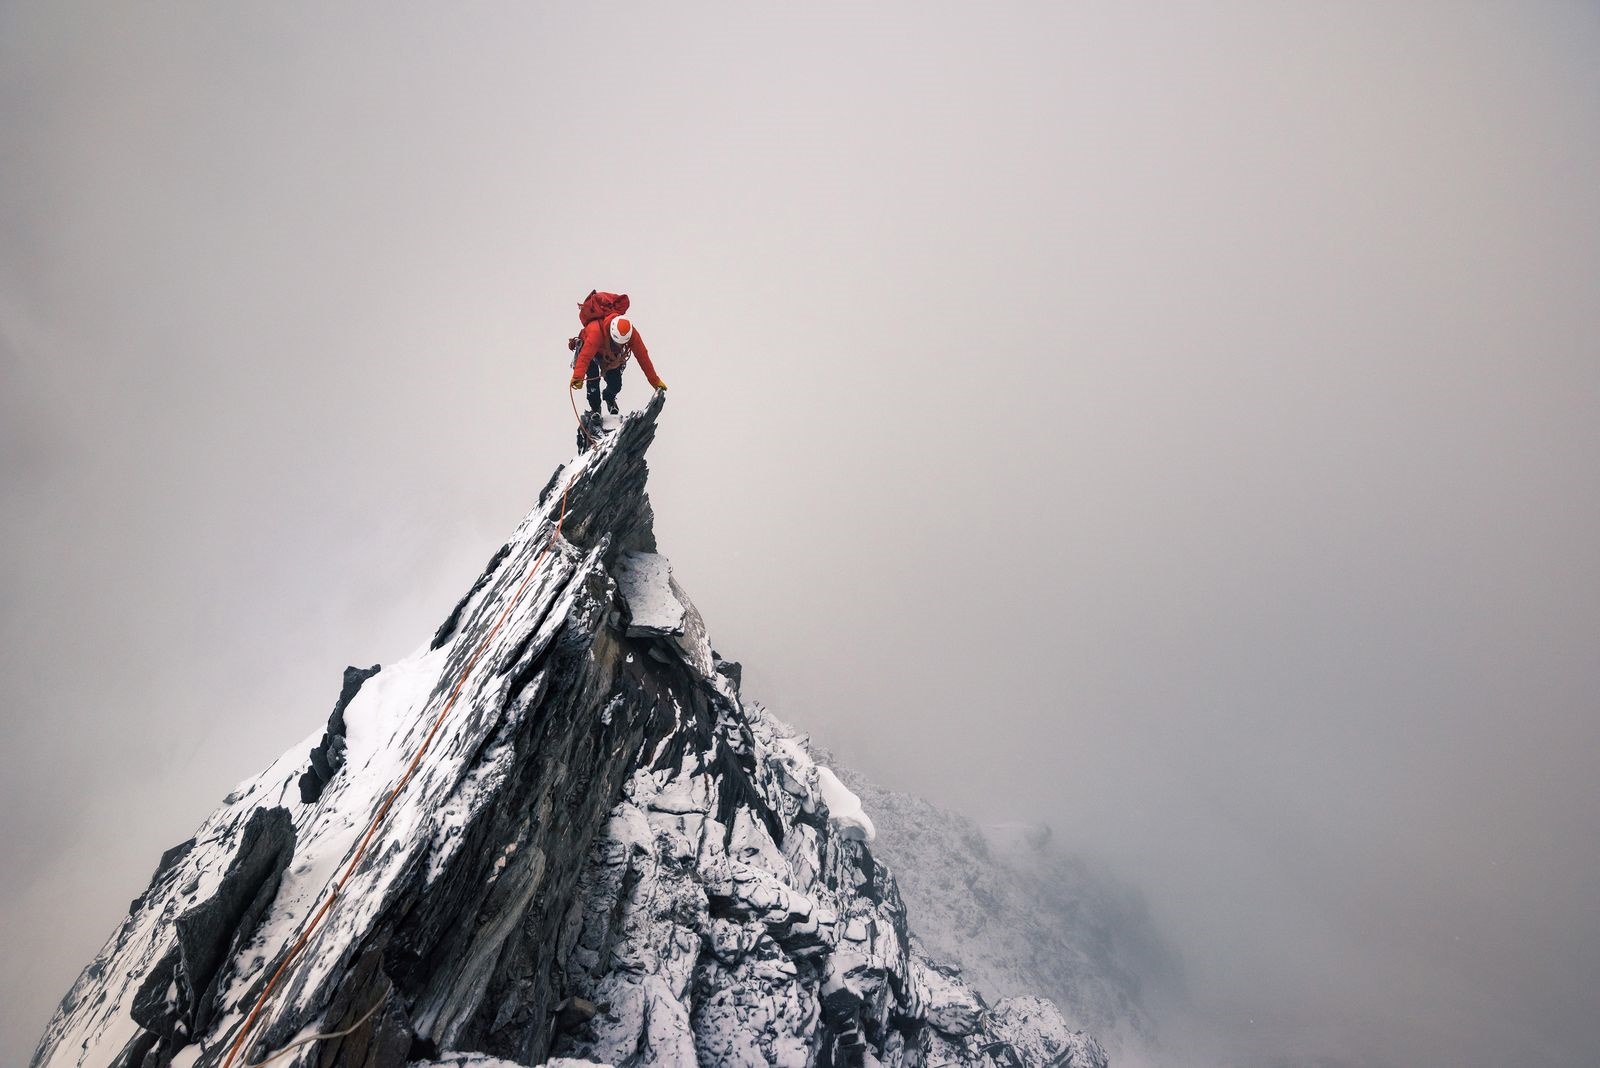 صعود به قله ناهموار (عکس)